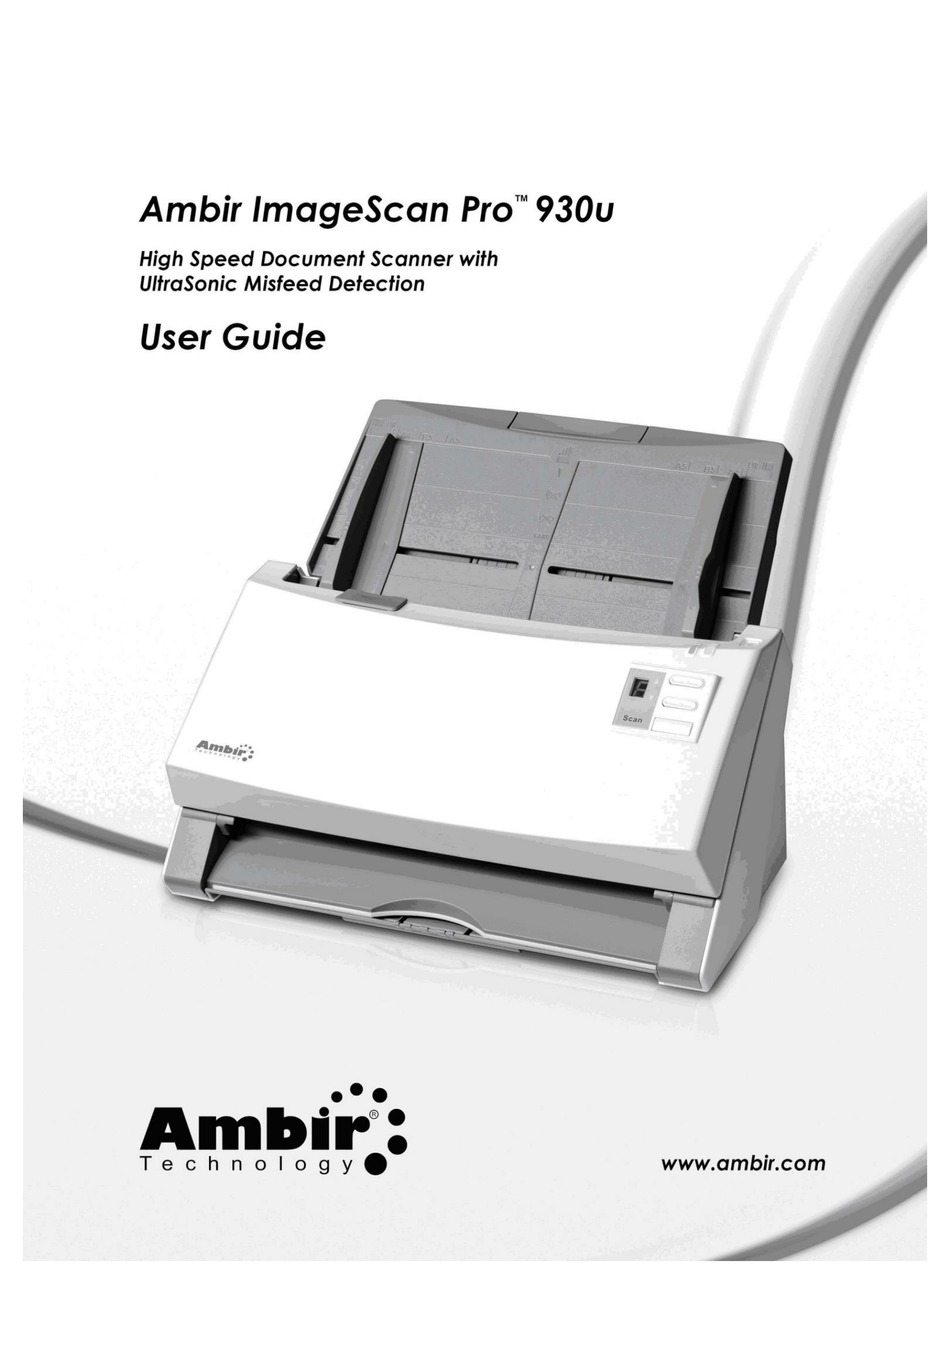 Ambir ImageScan Pro 930u Driver Download For Windows